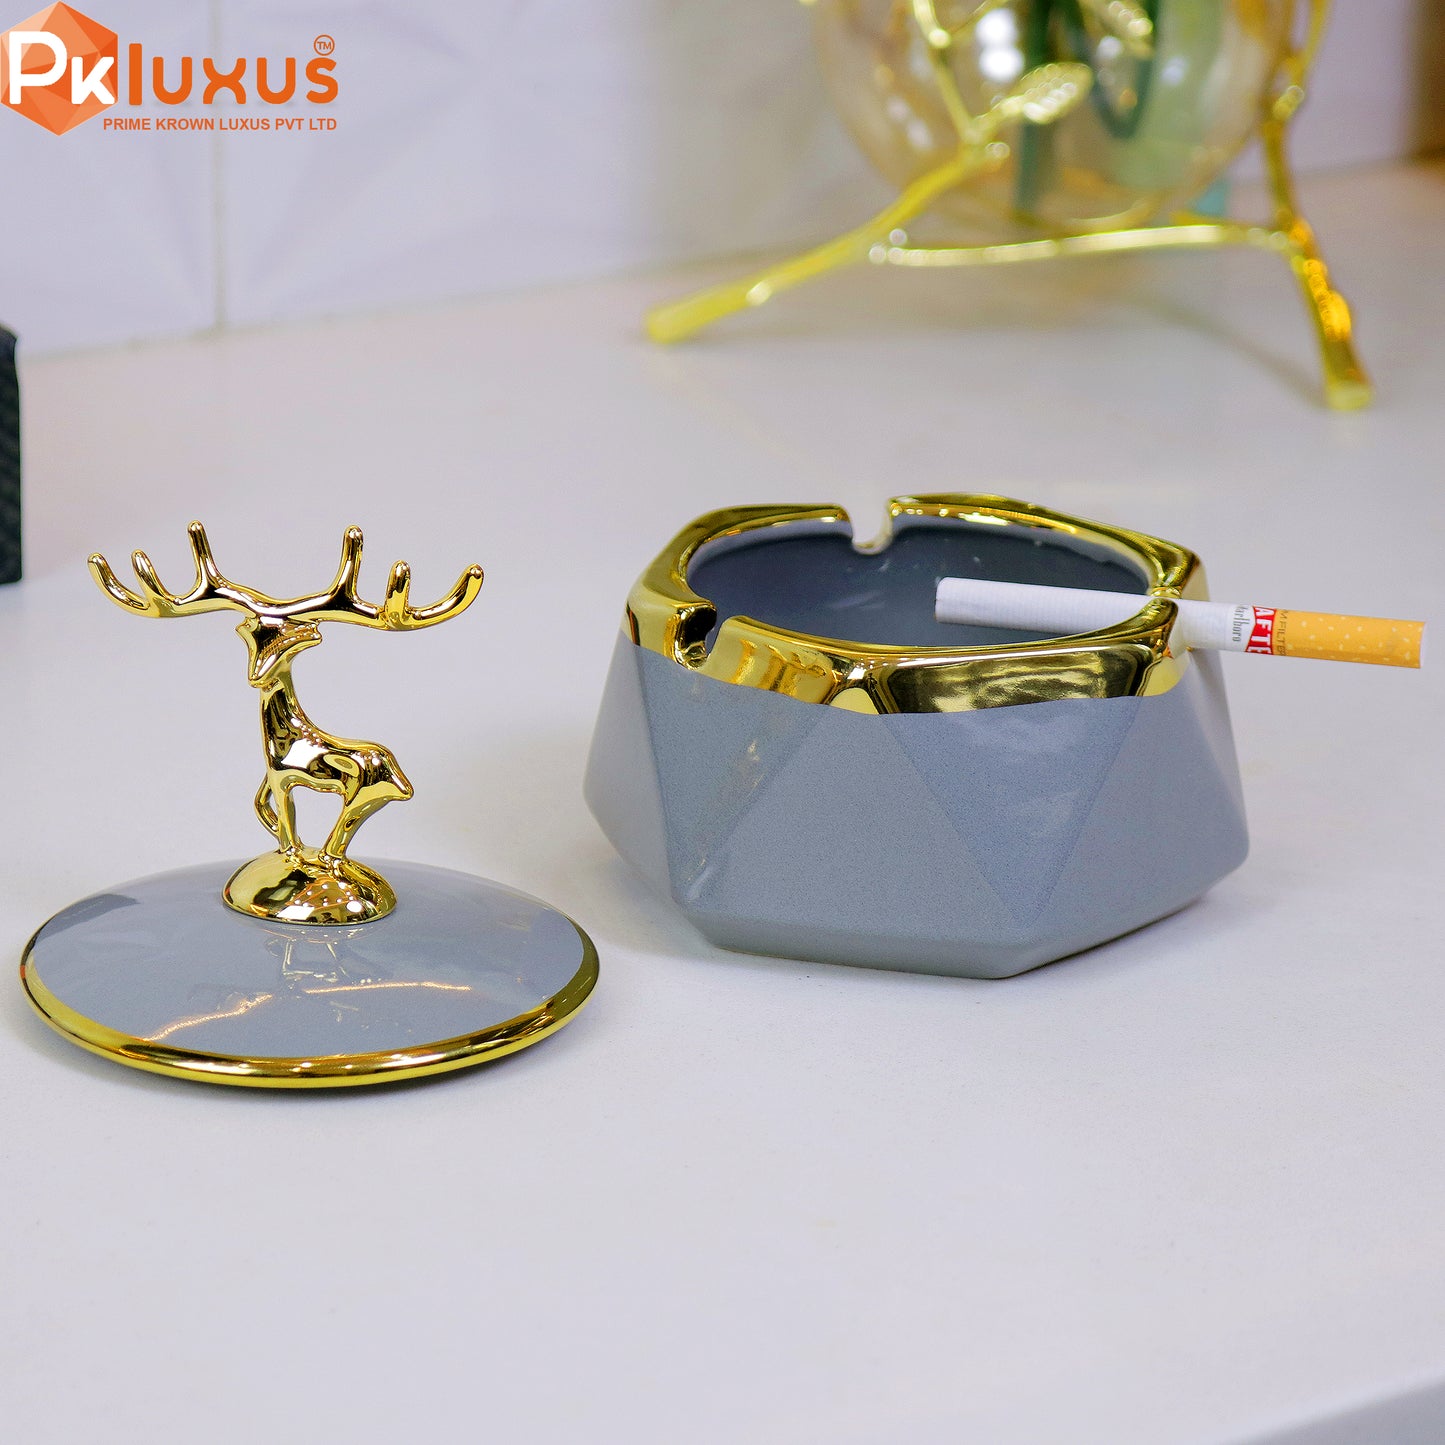 Luxury Gray & Golden Deer Ashtray With Lid By PK LUXUS™ - PK LUXUS